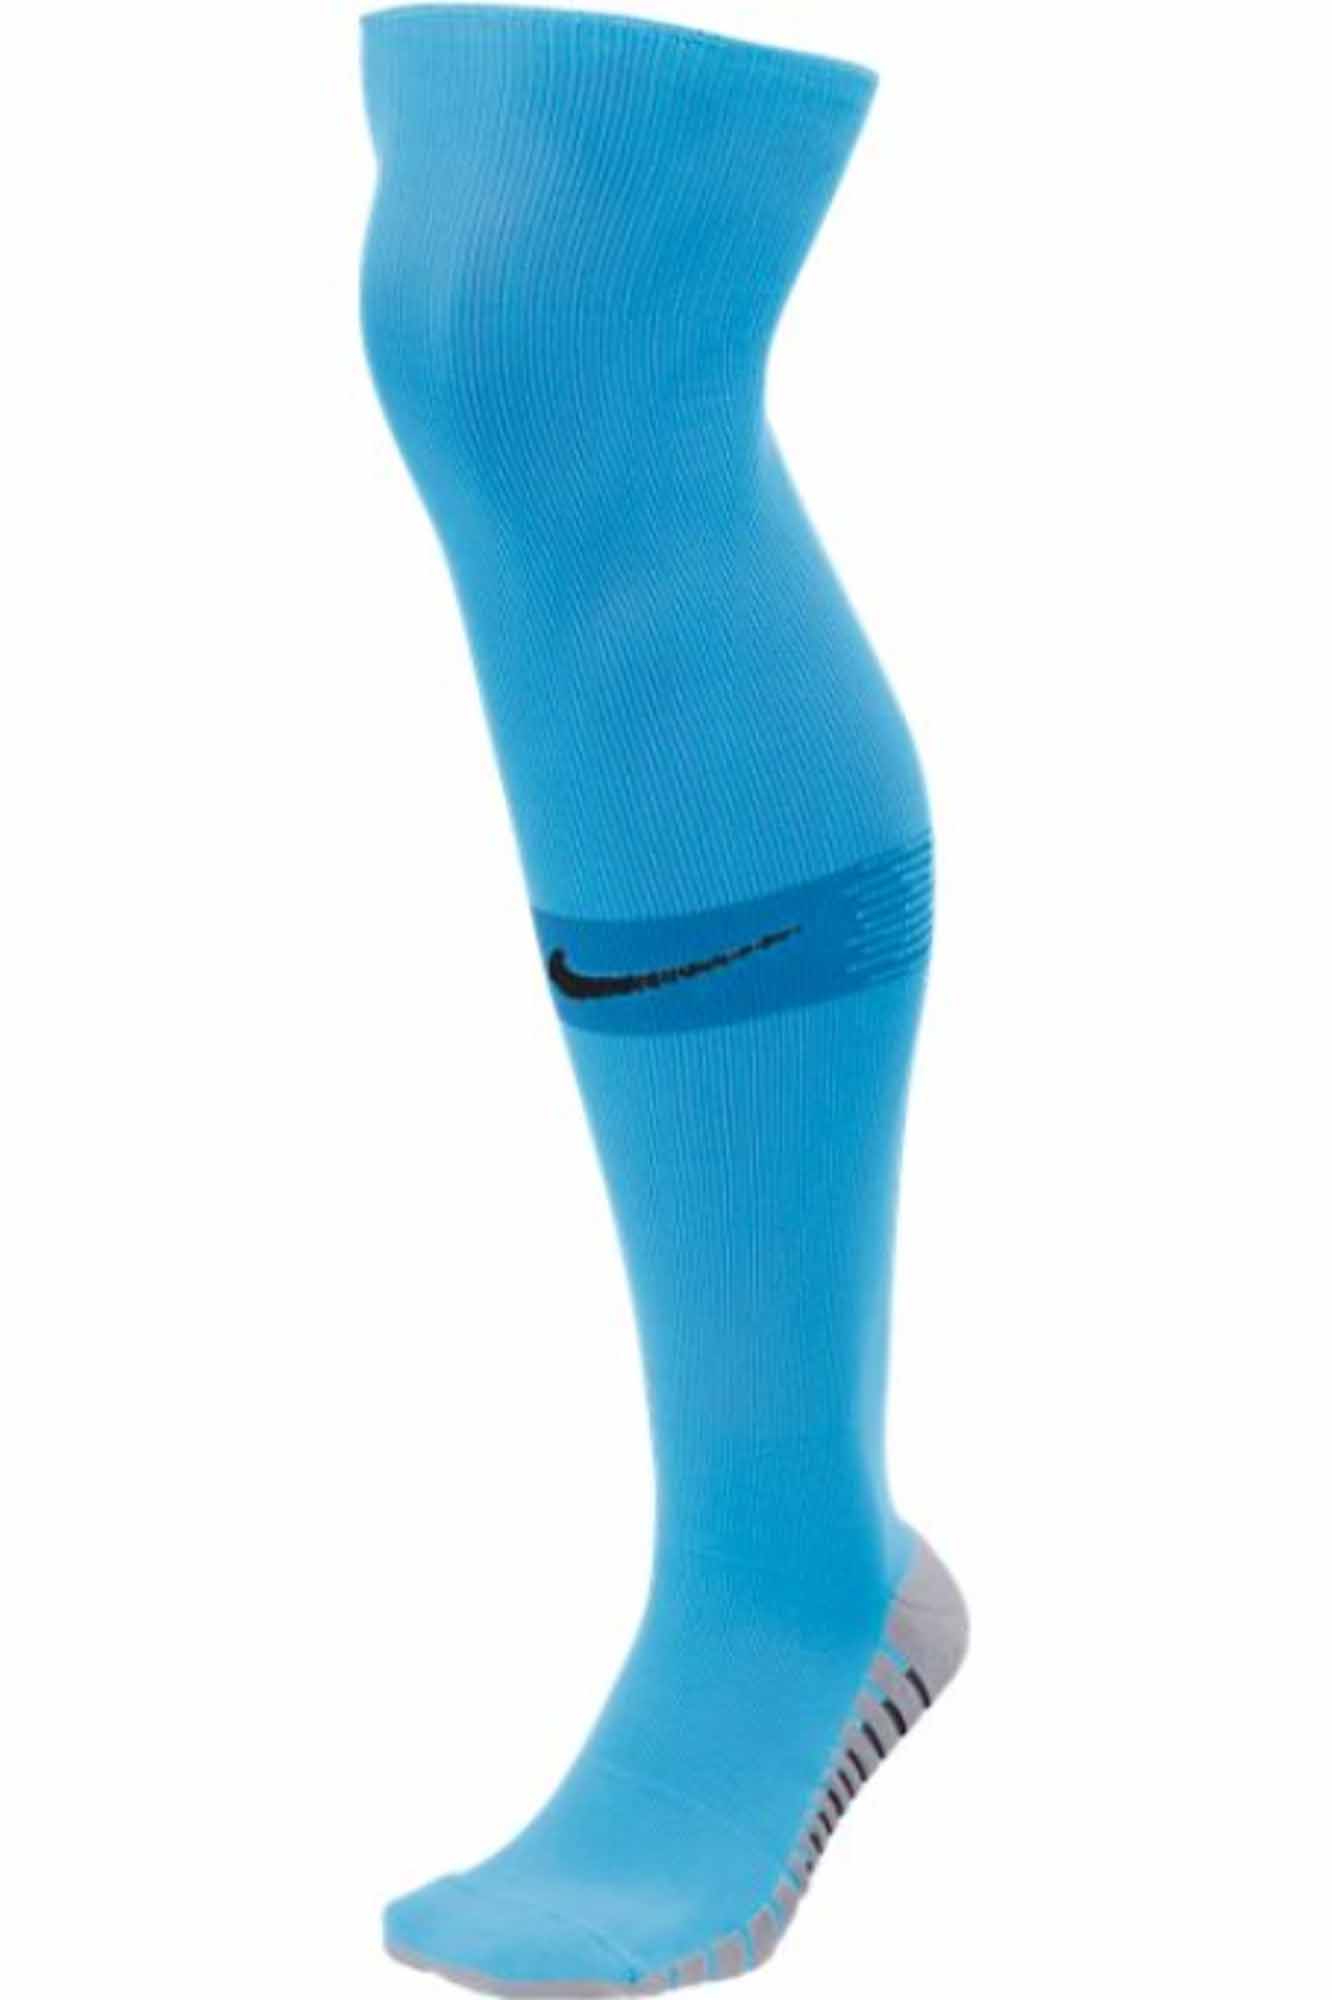 Nike Team Matchfit Soccer Socks - University Blue/Italy Blue - SoccerPro